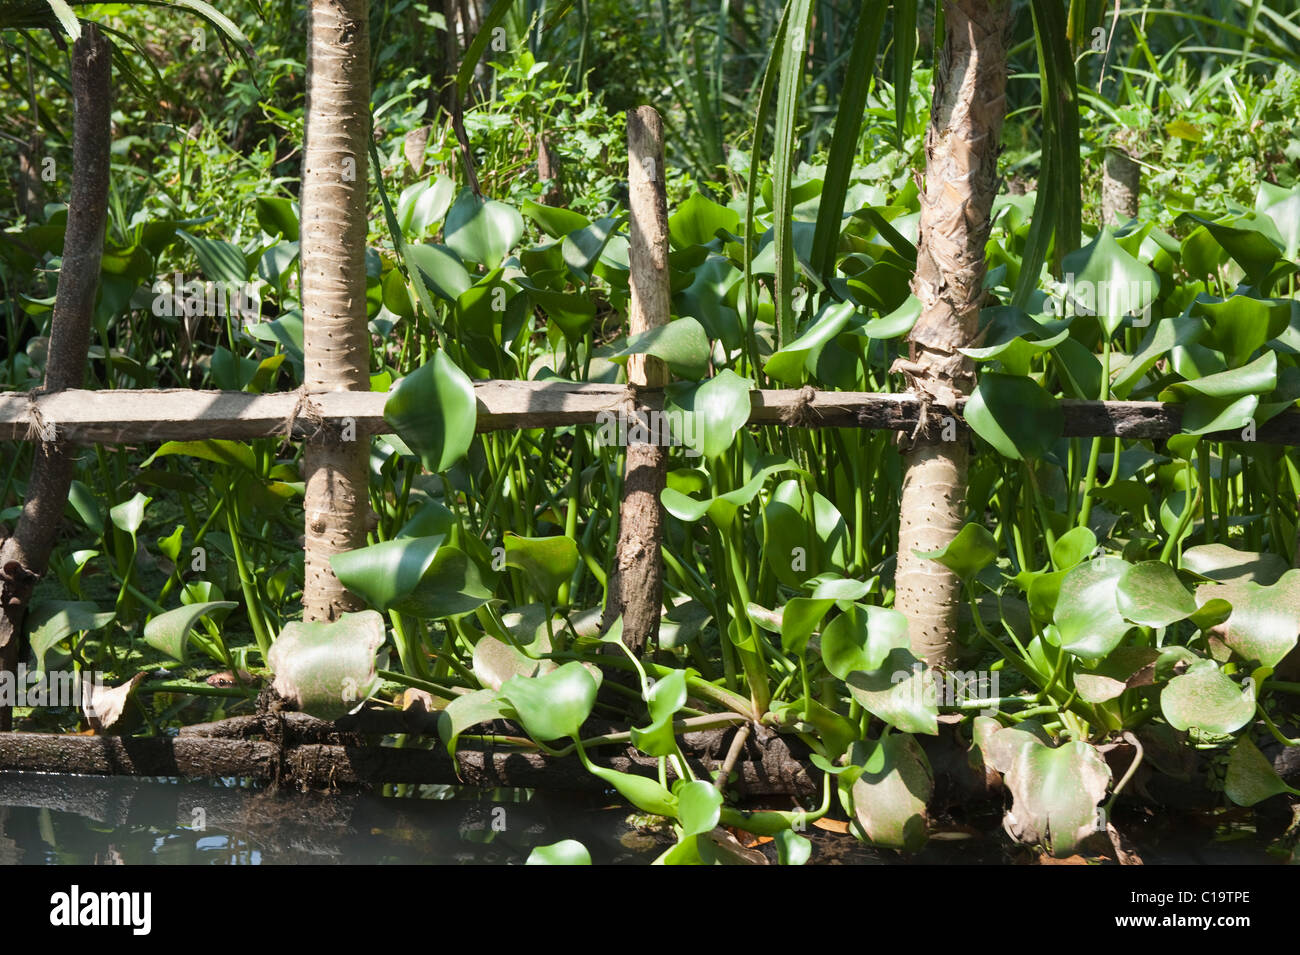 La jacinthe d'eau dans les plantes, Kochi, Kerala, Inde Banque D'Images